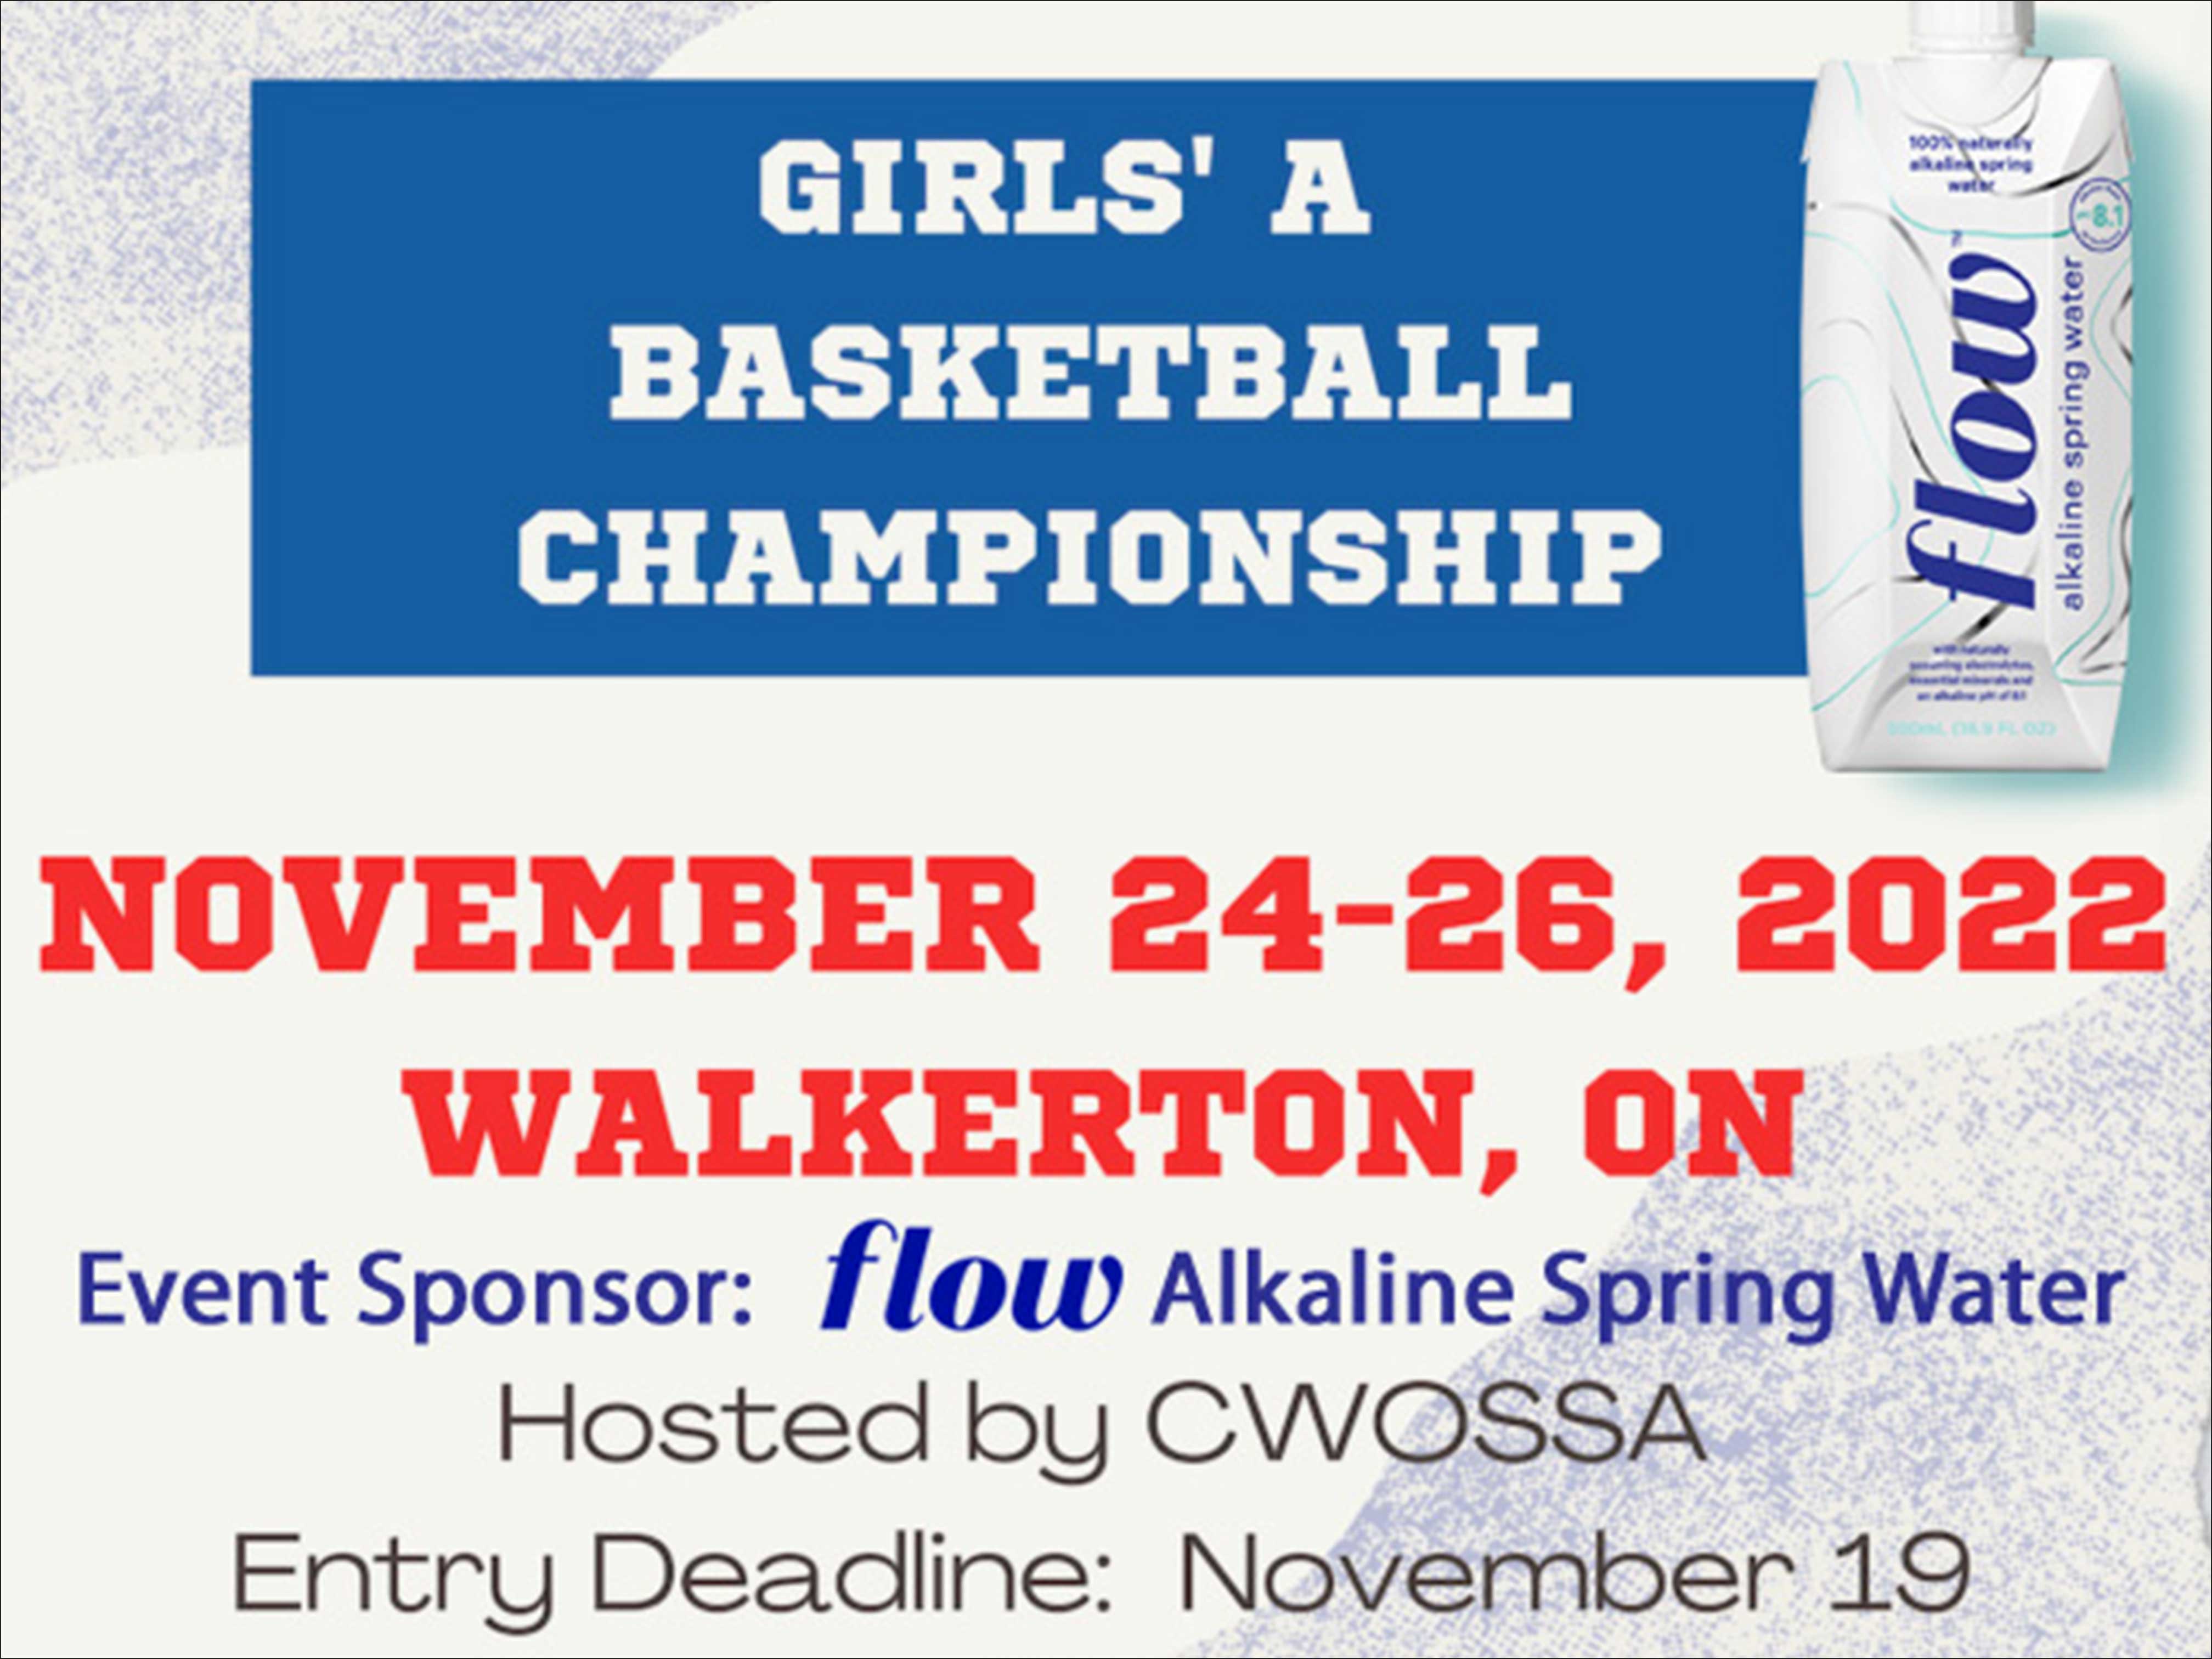 OFSAA Girls' A Basketball Championships - November 24-26, 2022